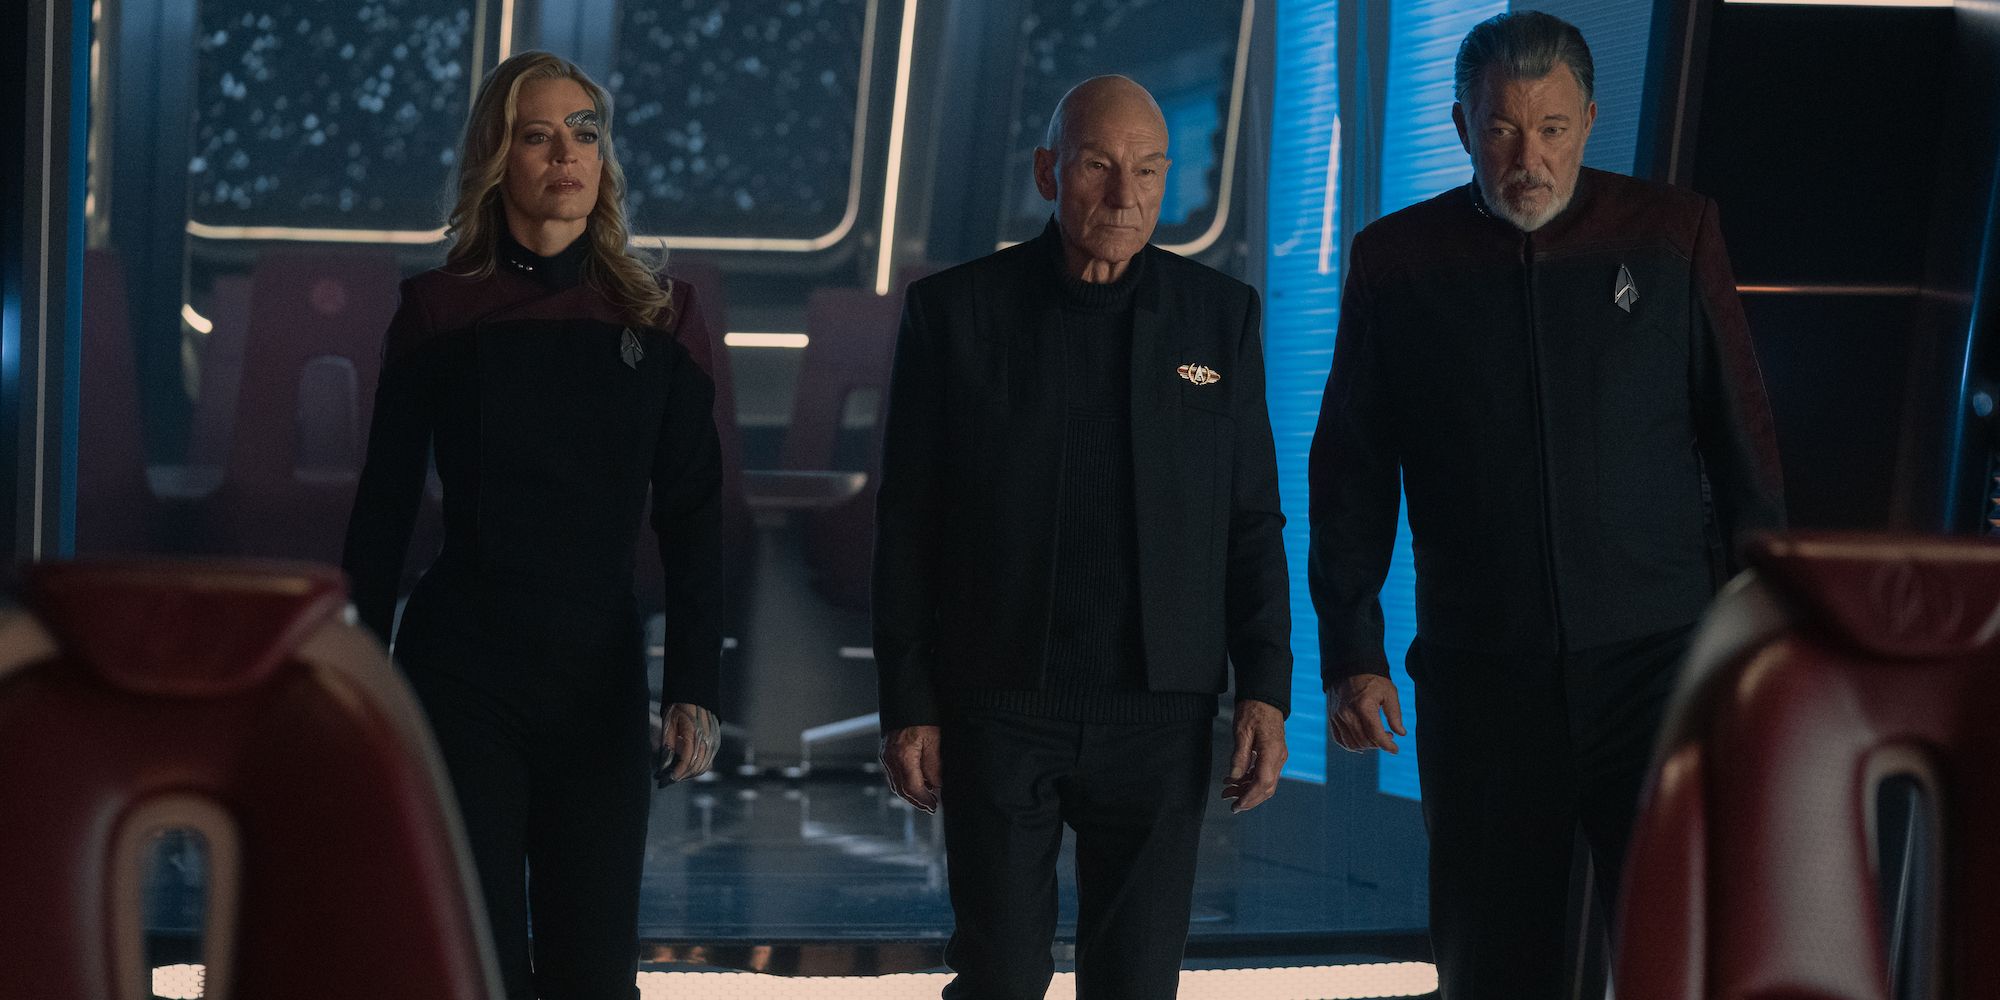 Jeri Ryan as Seven, Patrick Stewart as Picard, and Jonathan Frakes